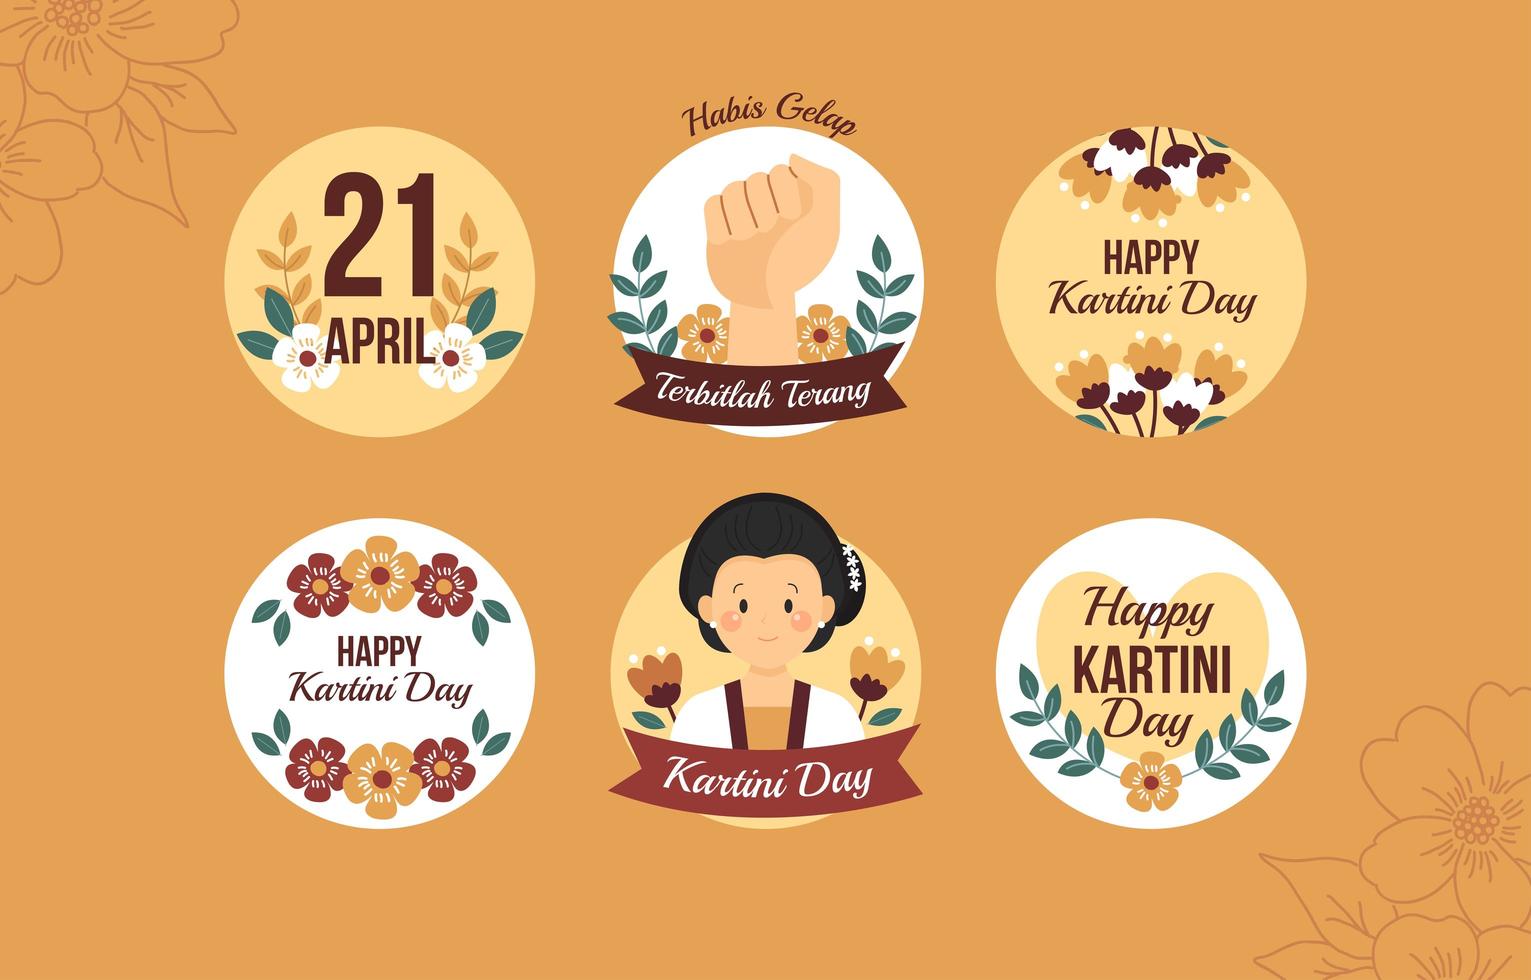 Frauenermächtigung während des Kartini-Tagesaufklebers vektor